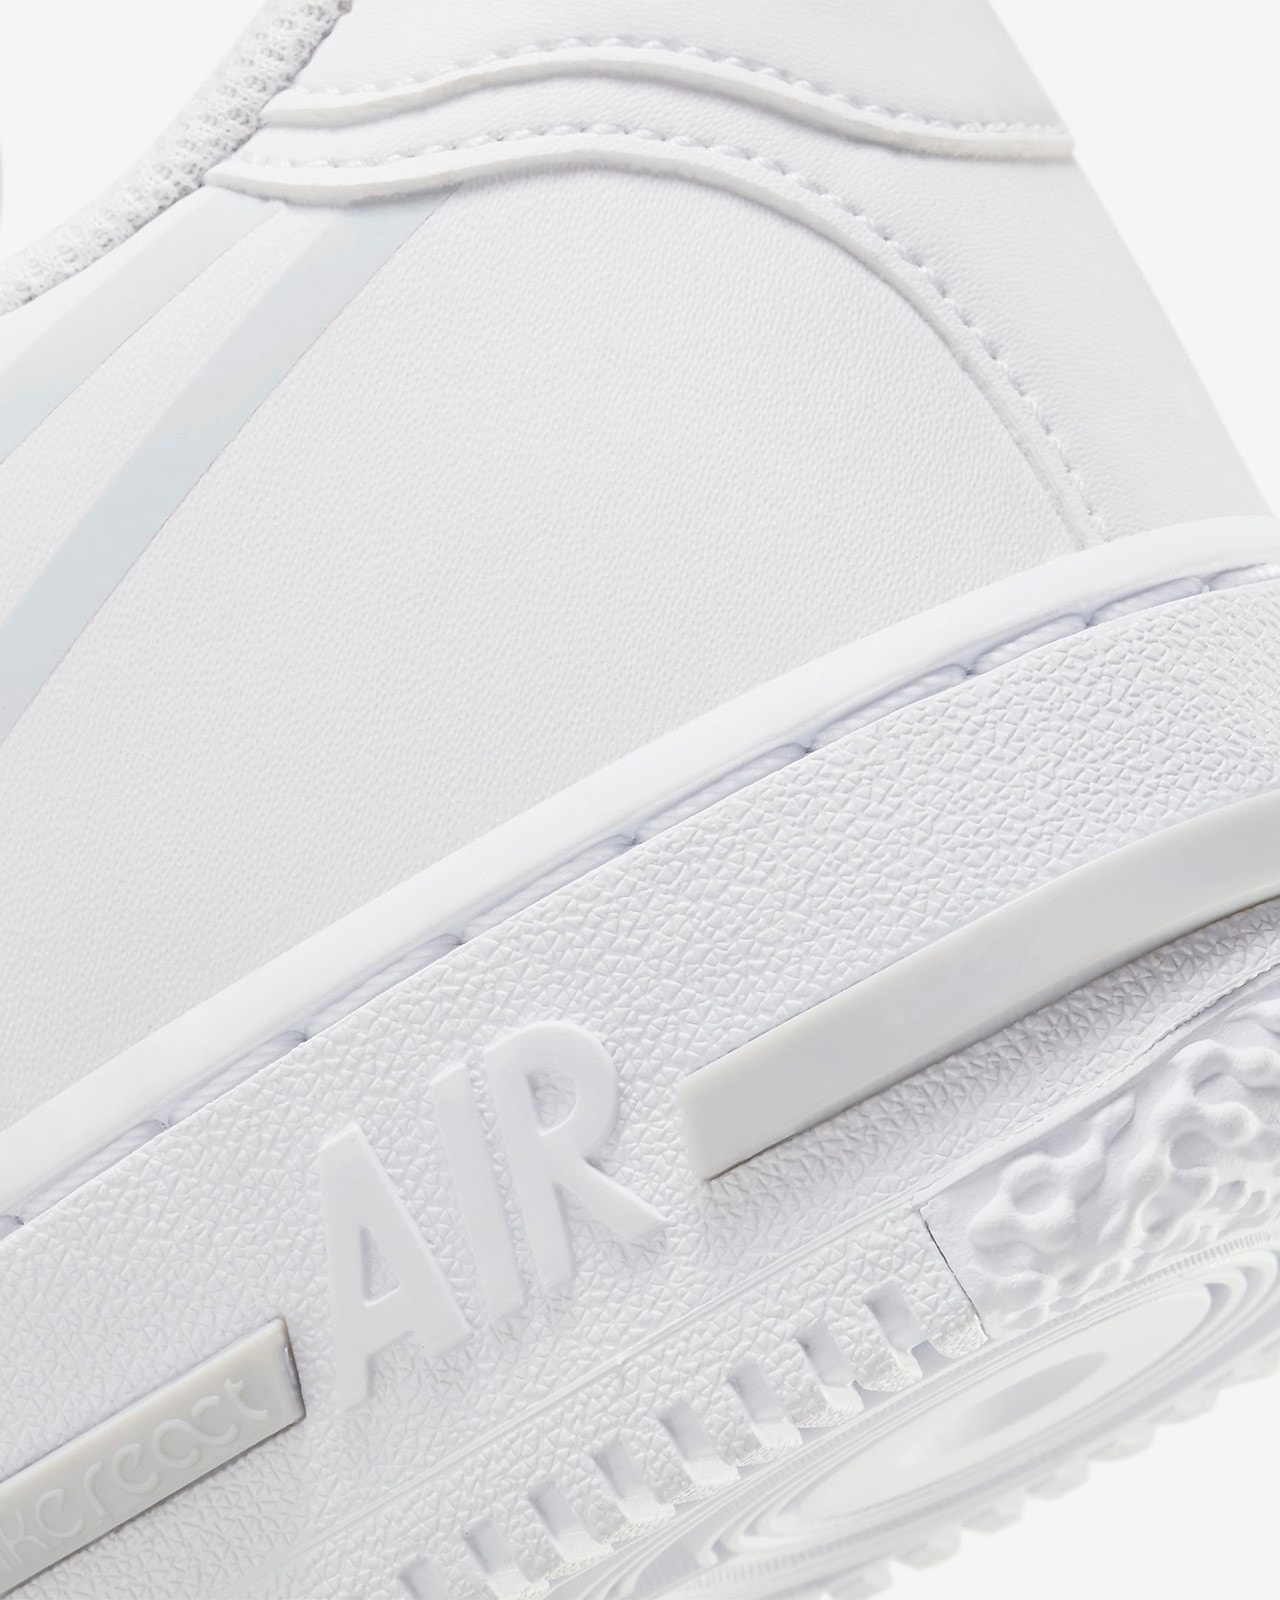 Nike 全新鞋款 Air Force 1 React D/MS/X 全白配色正式發佈